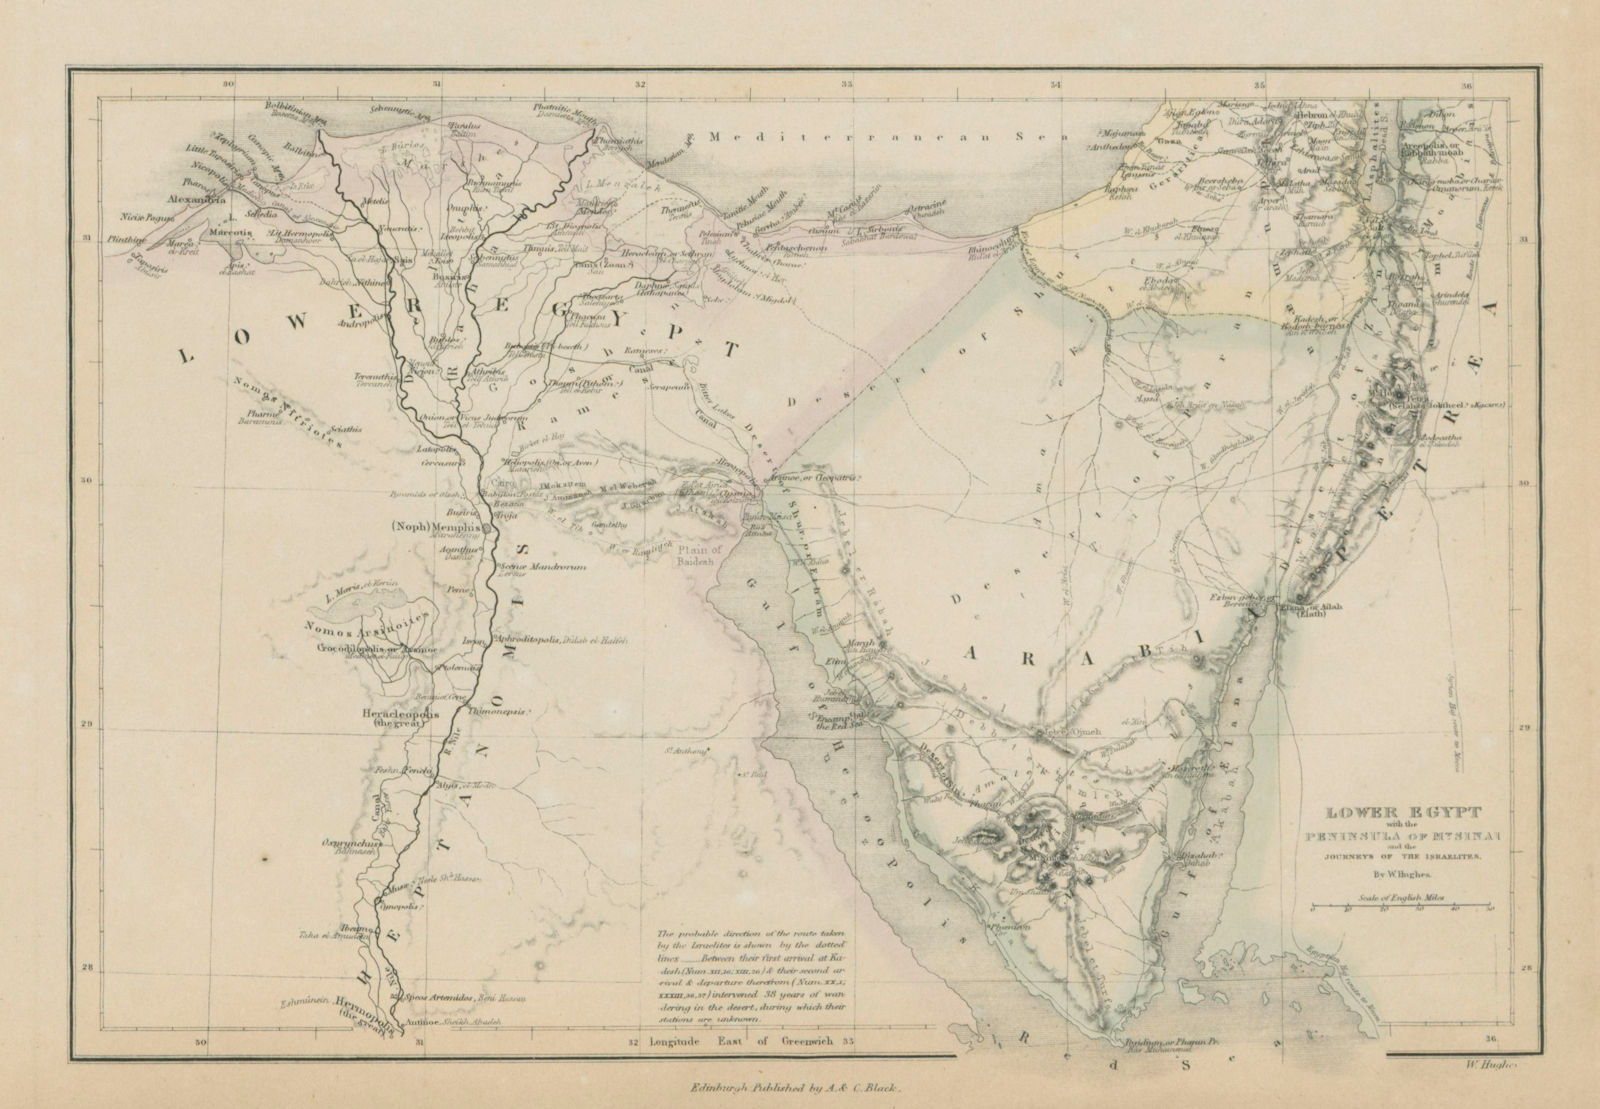 Lower Egypt, Sinai peninsula & Exodus of the Israelites. WILLIAM HUGHES 1856 map